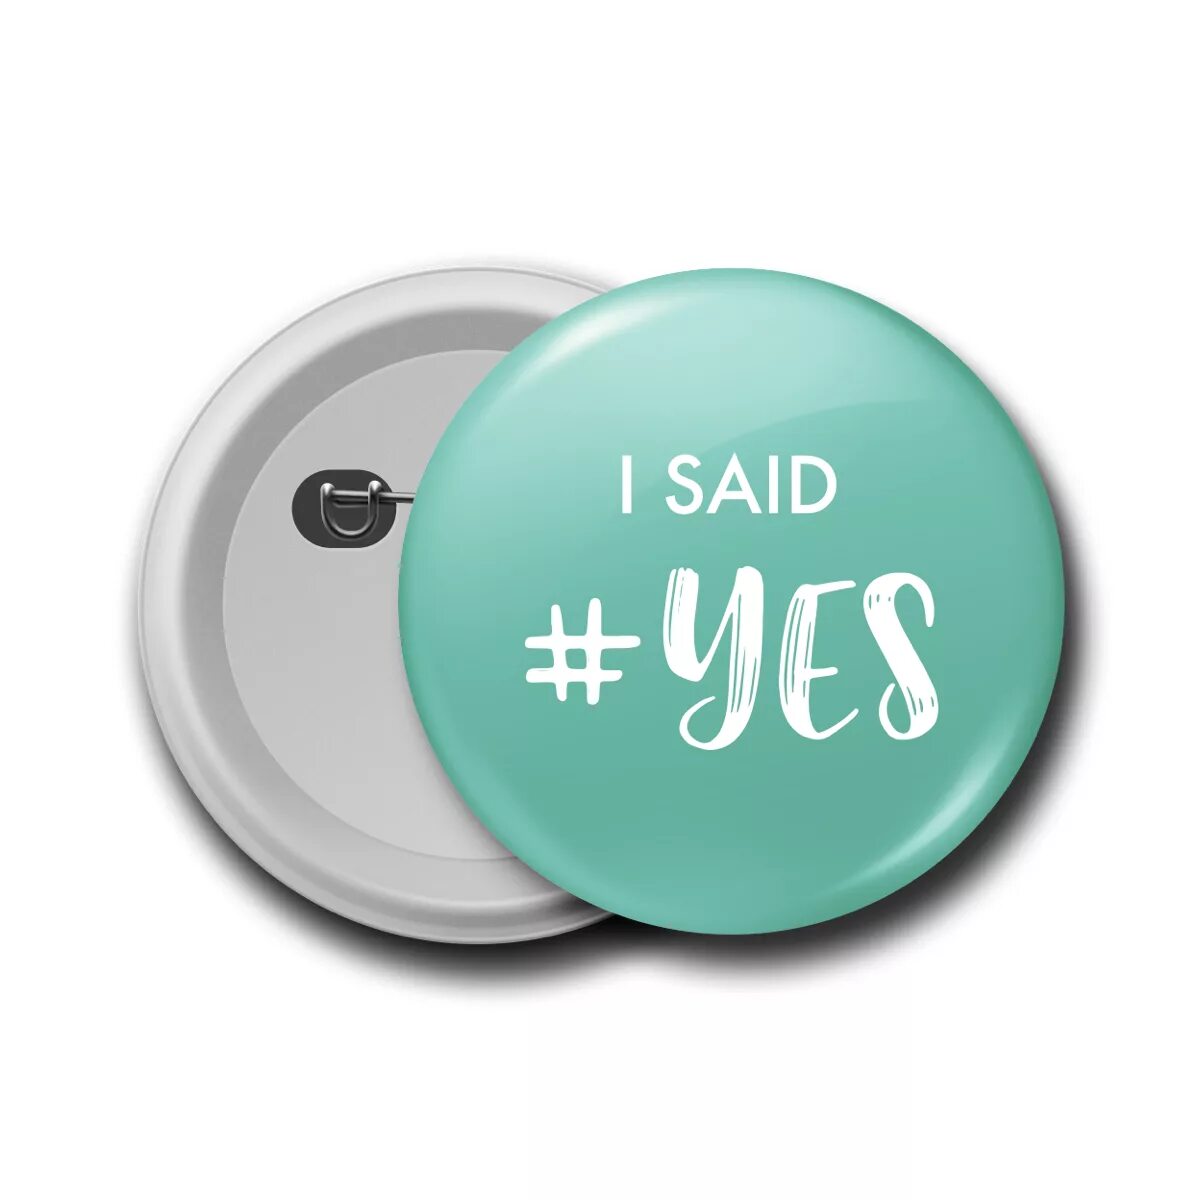 I have said yes. Say Yes косметика. I said Yes. Логотип i said Yes. I said Yes кольцо.